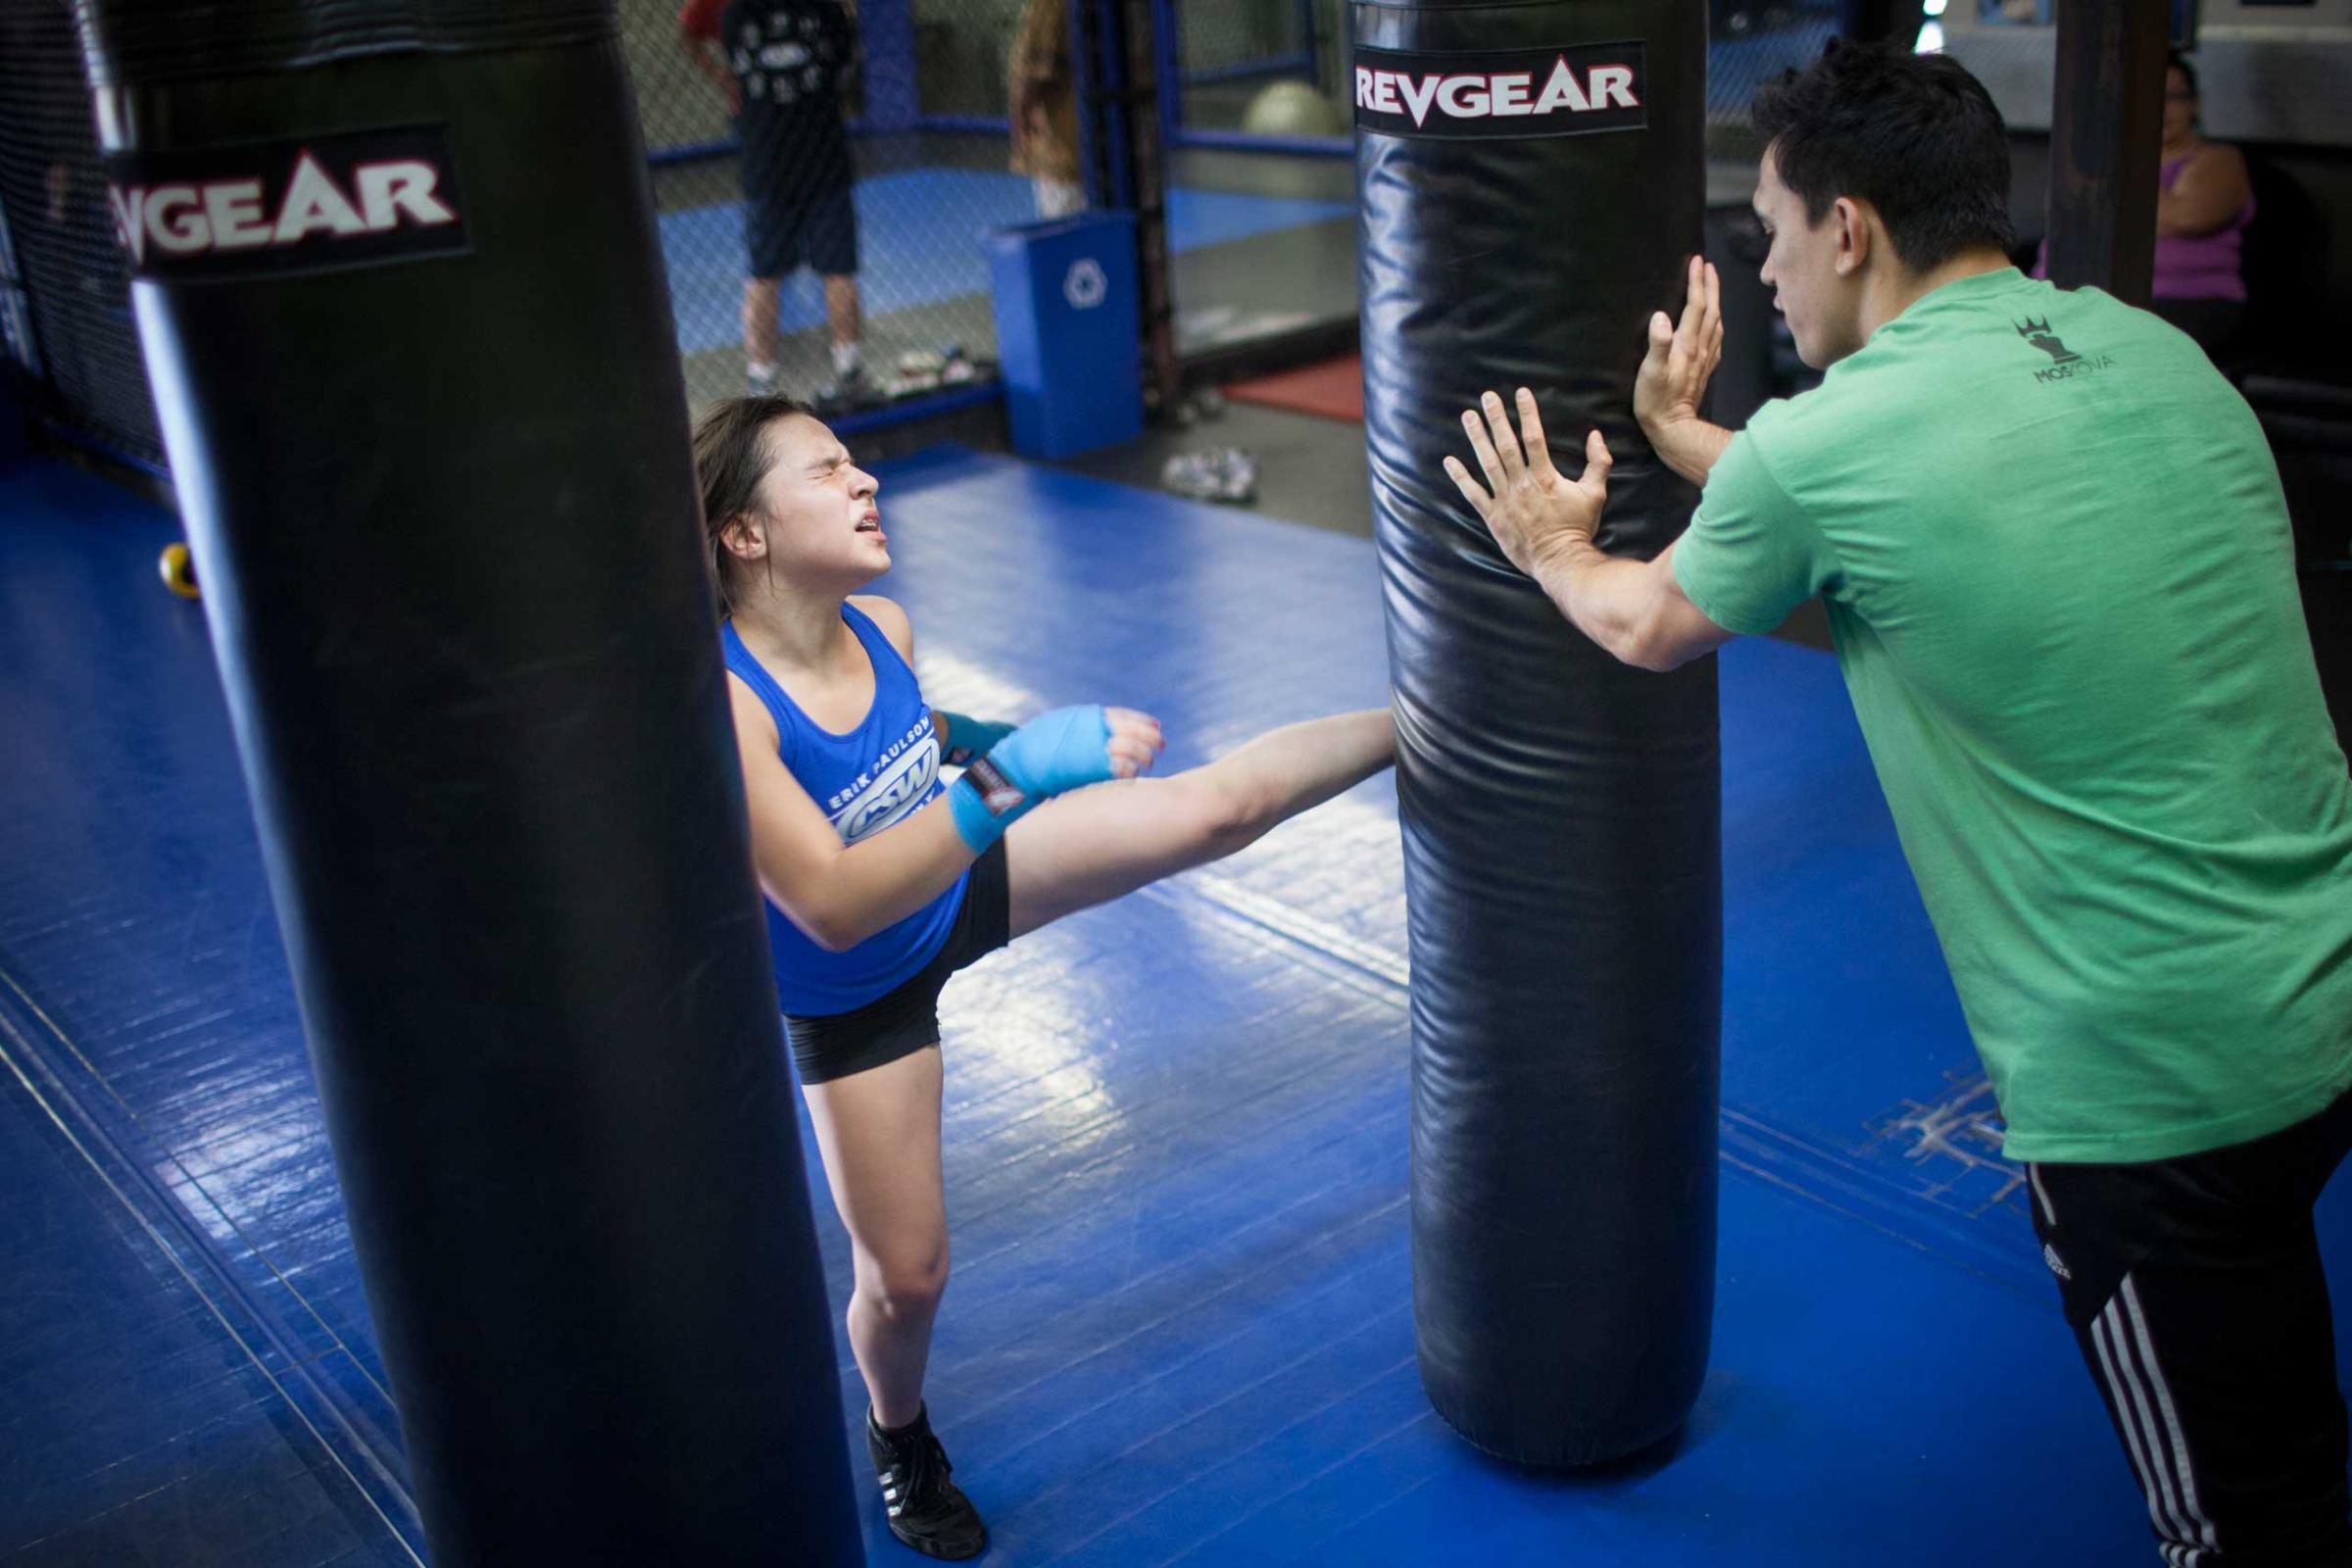 Cheyenne Bowman, 11, at personal MMA practice with coach Craig Wilkerson, a professional MMA fighter. La Habra, CA. November 11th 2013. Photo: Miikka Pirinen